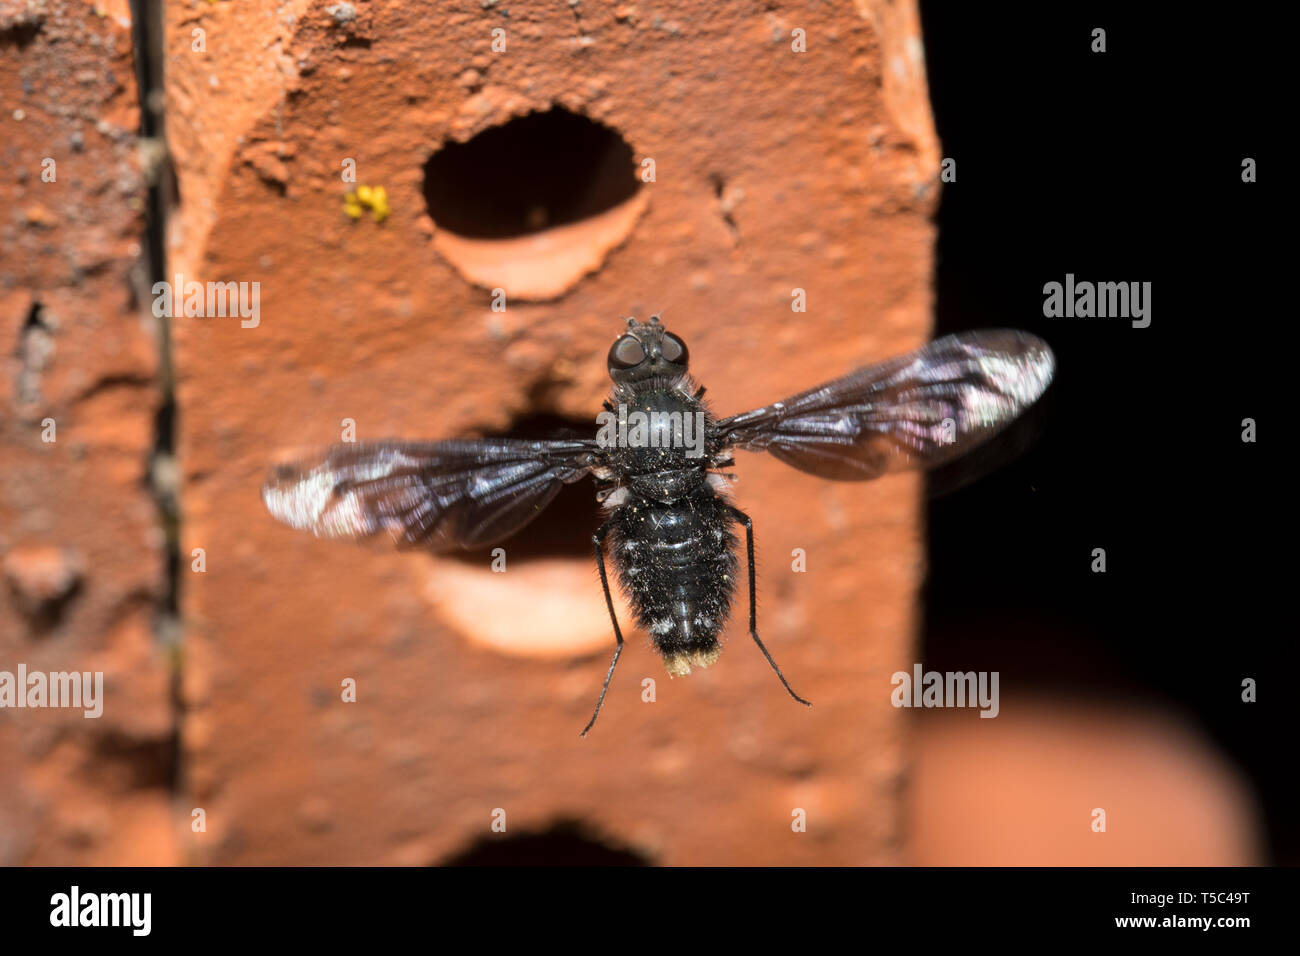 Trauerschweber, Anthrax anthrax, bee fly Stock Photo